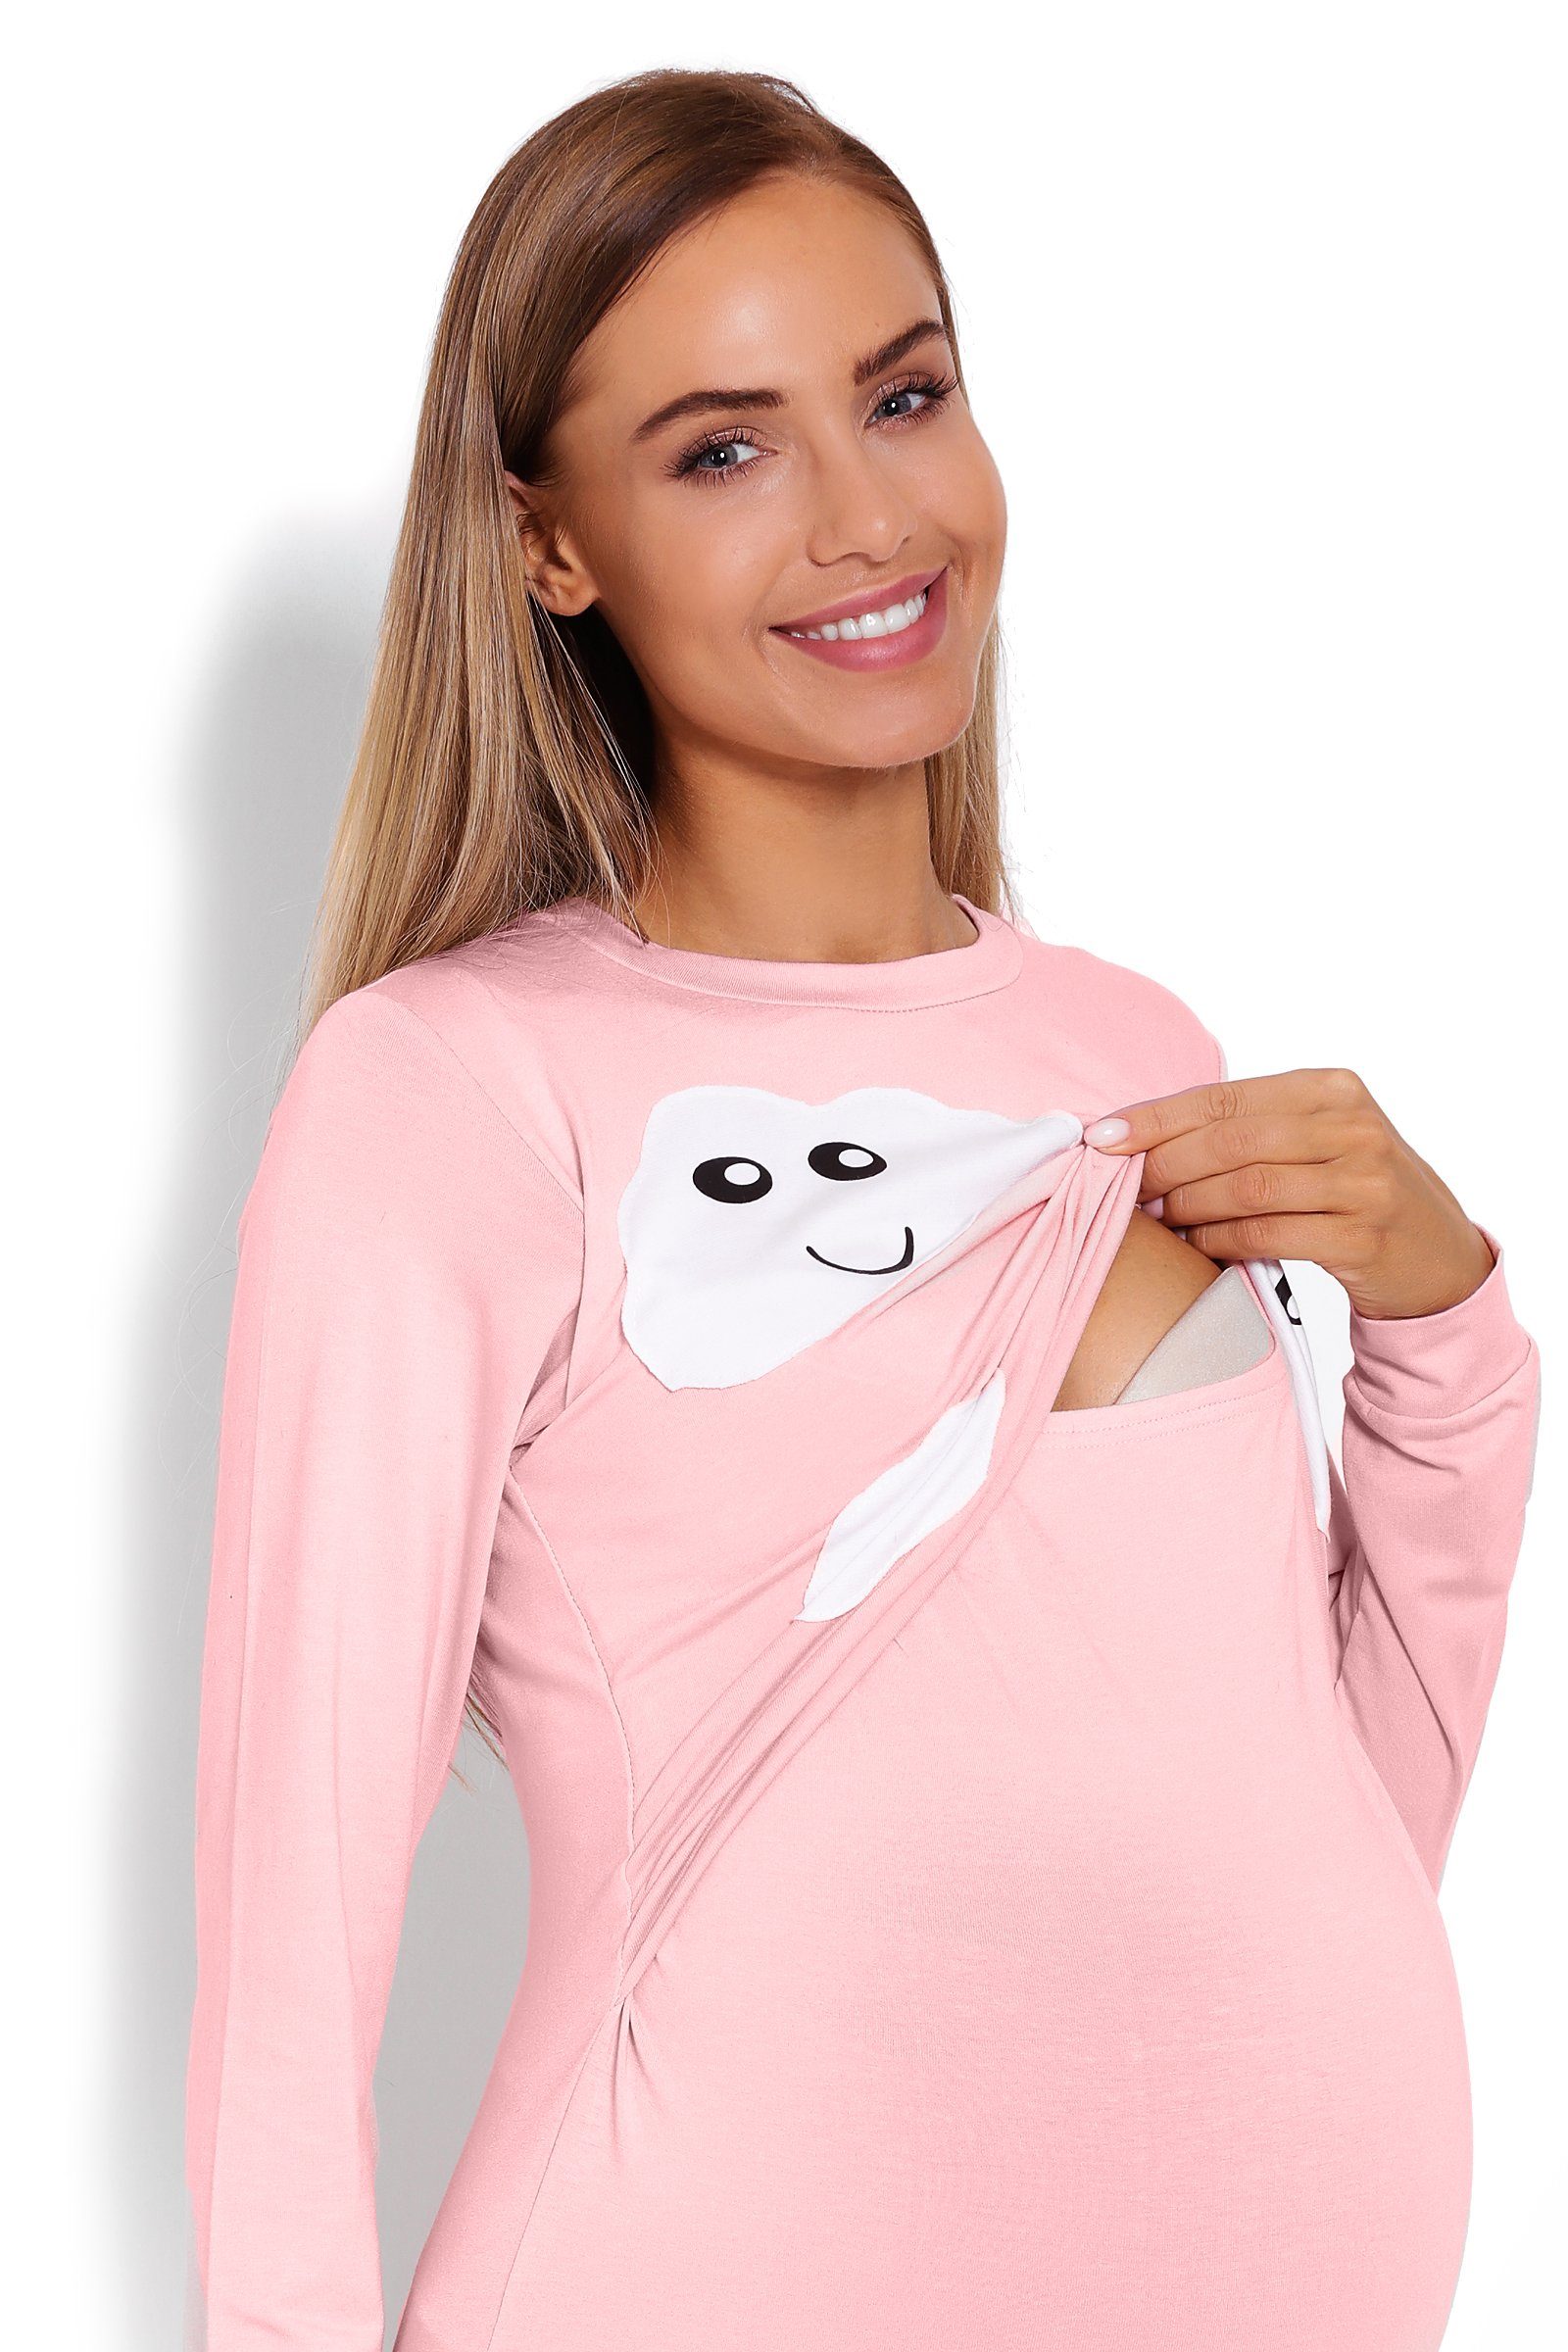 PeeKaBoo Umstandspyjama Schlafanzug Stillen Schwangerschaft rosa/pink Stillschlafanzug